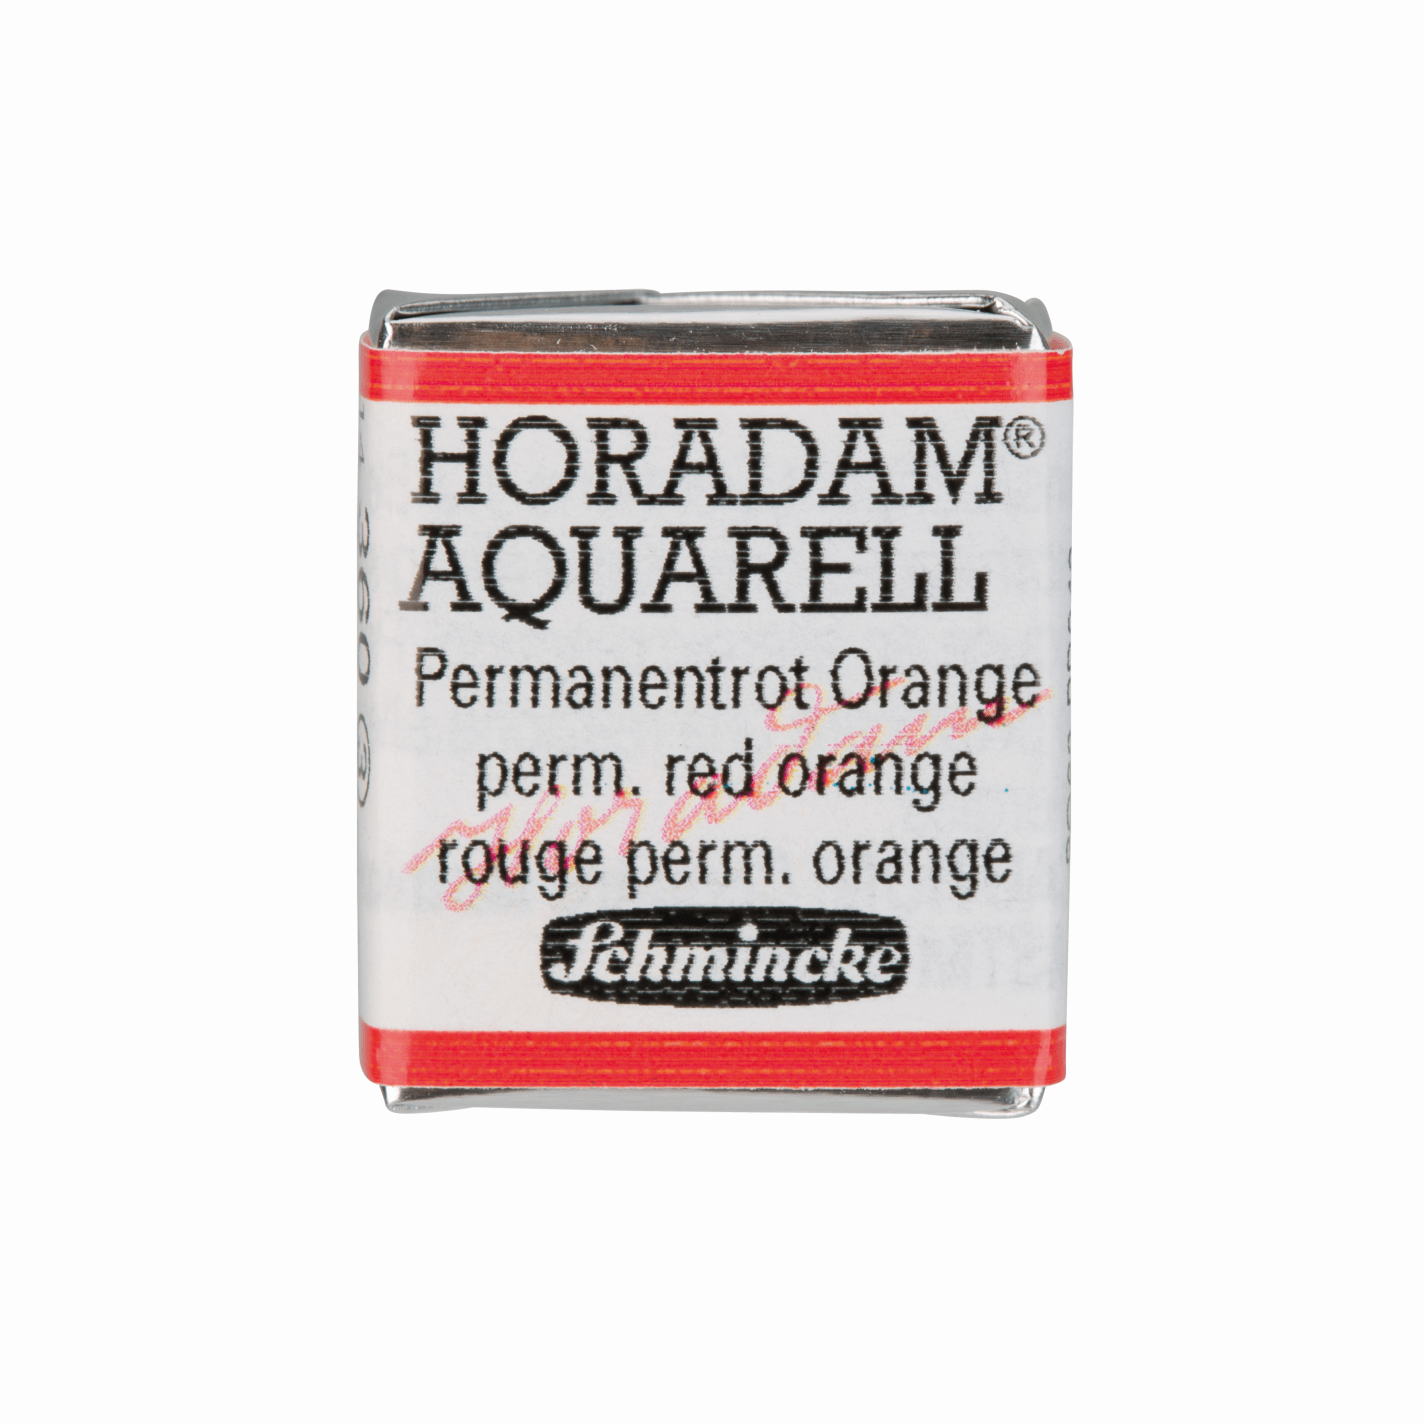 Schmincke Horadam Aquarell pans 1/2 pan Permanent Red Orange